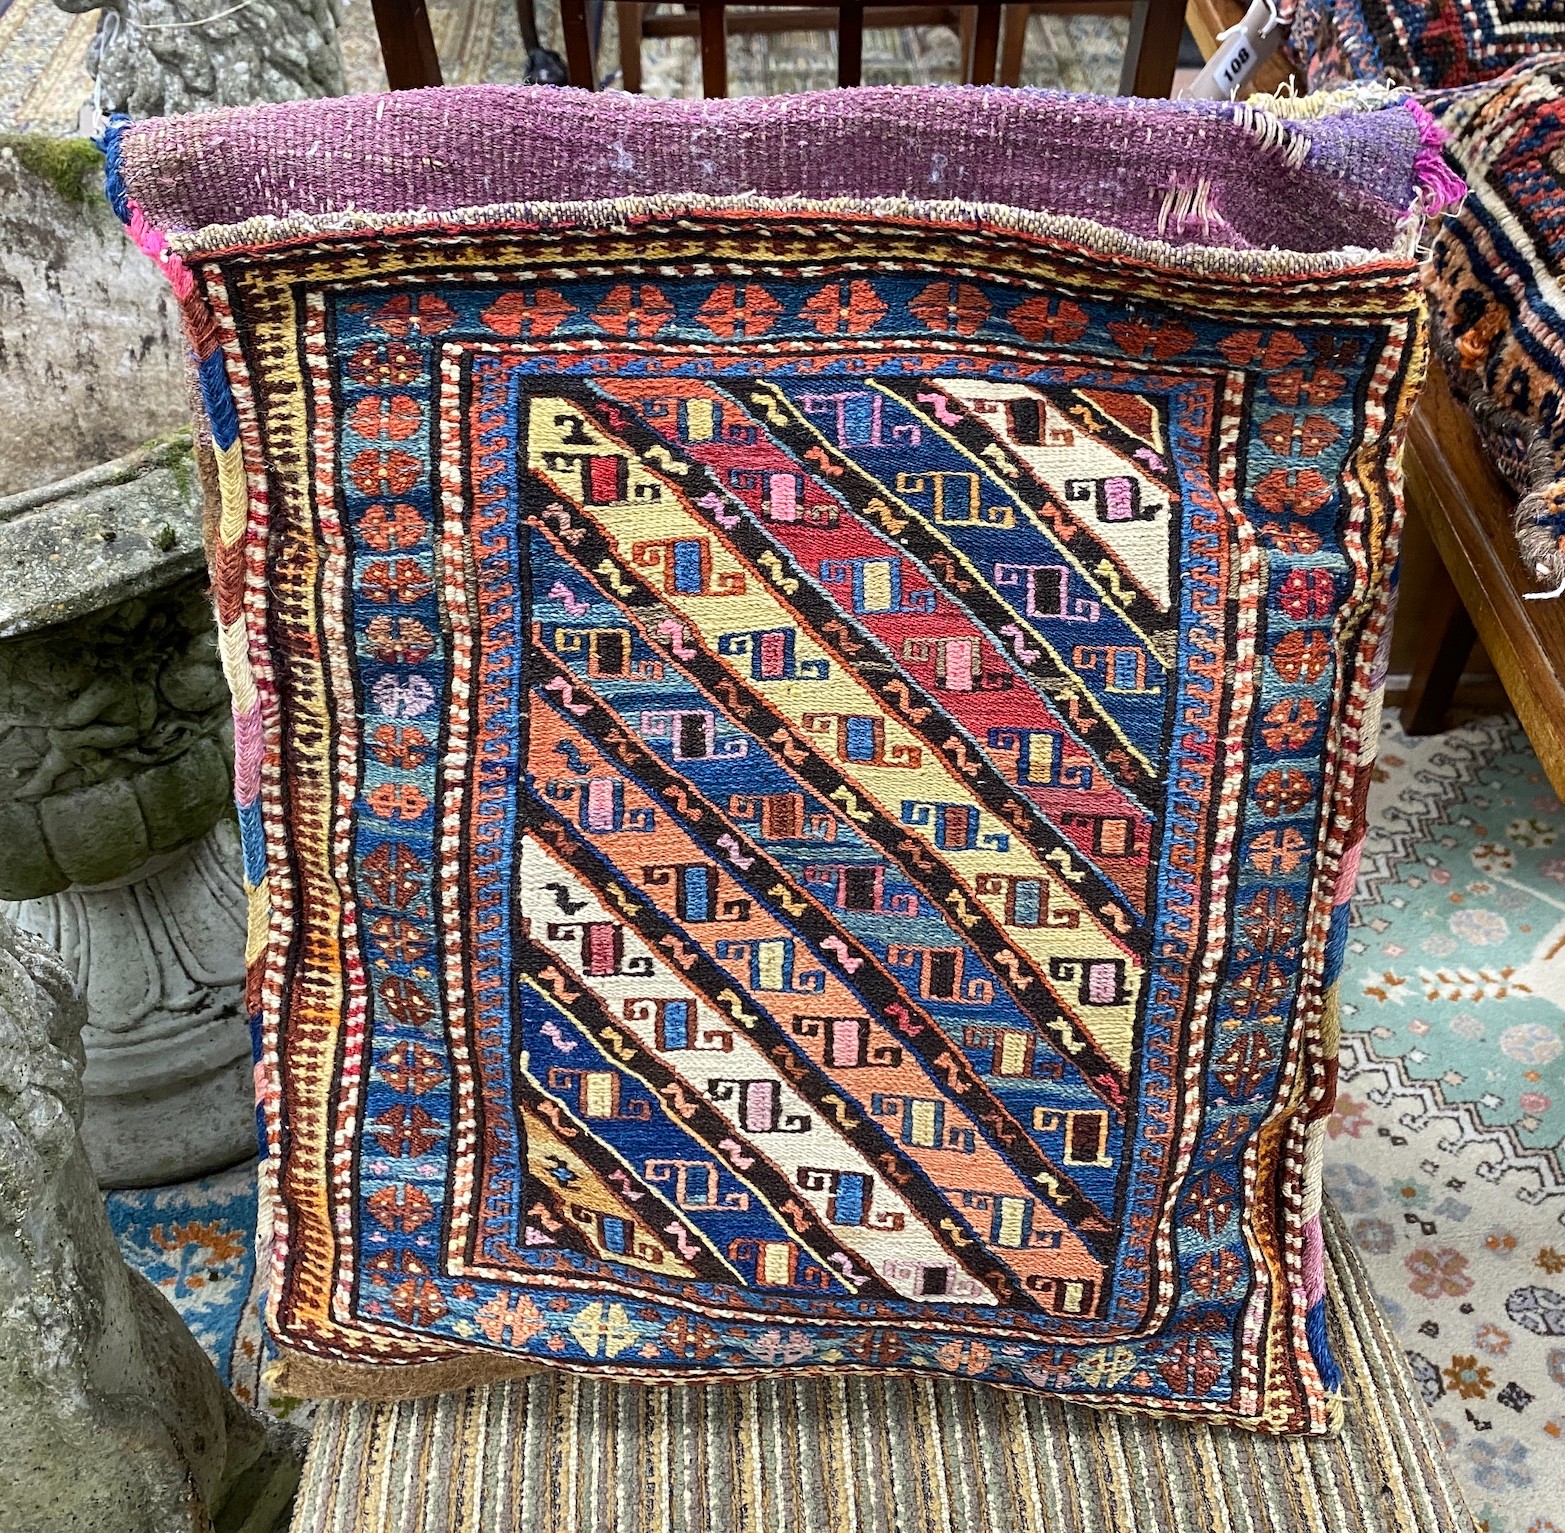 Three Persian salt bags made into cushions